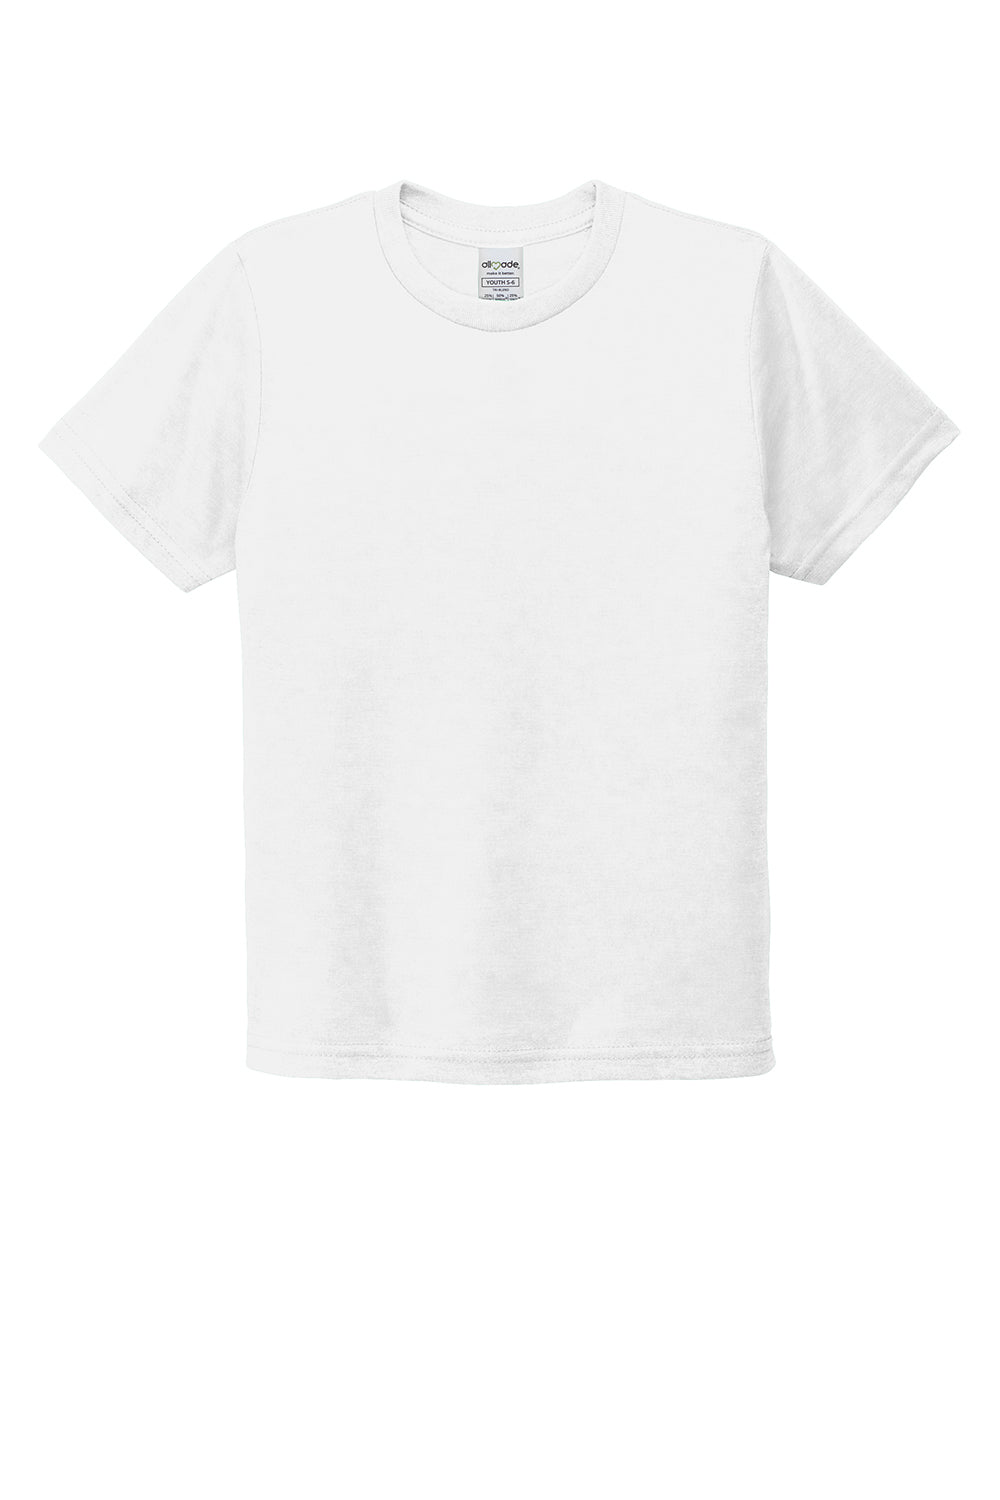 Allmade AL207 Youth Short Sleeve Crewneck T-Shirt Bright White Flat Front